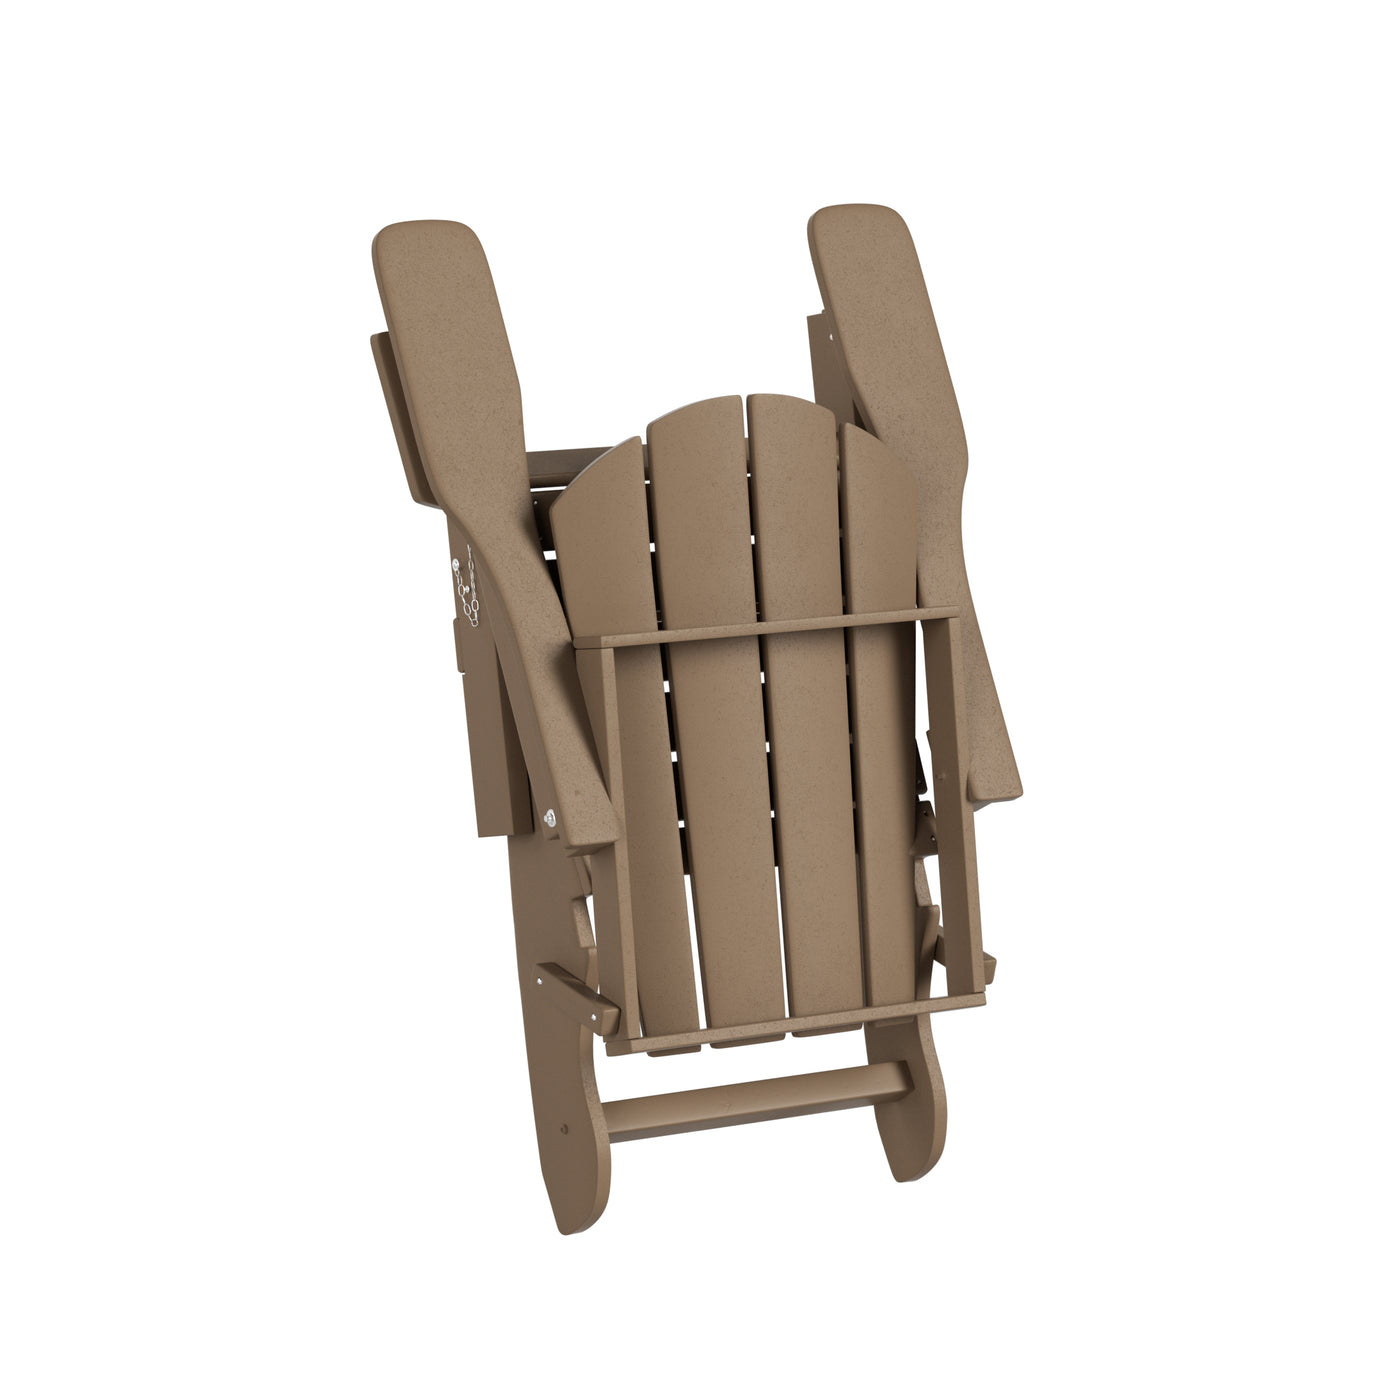 Malibu Outdoor Folding Poly Adirondack Chair (Set of 8)